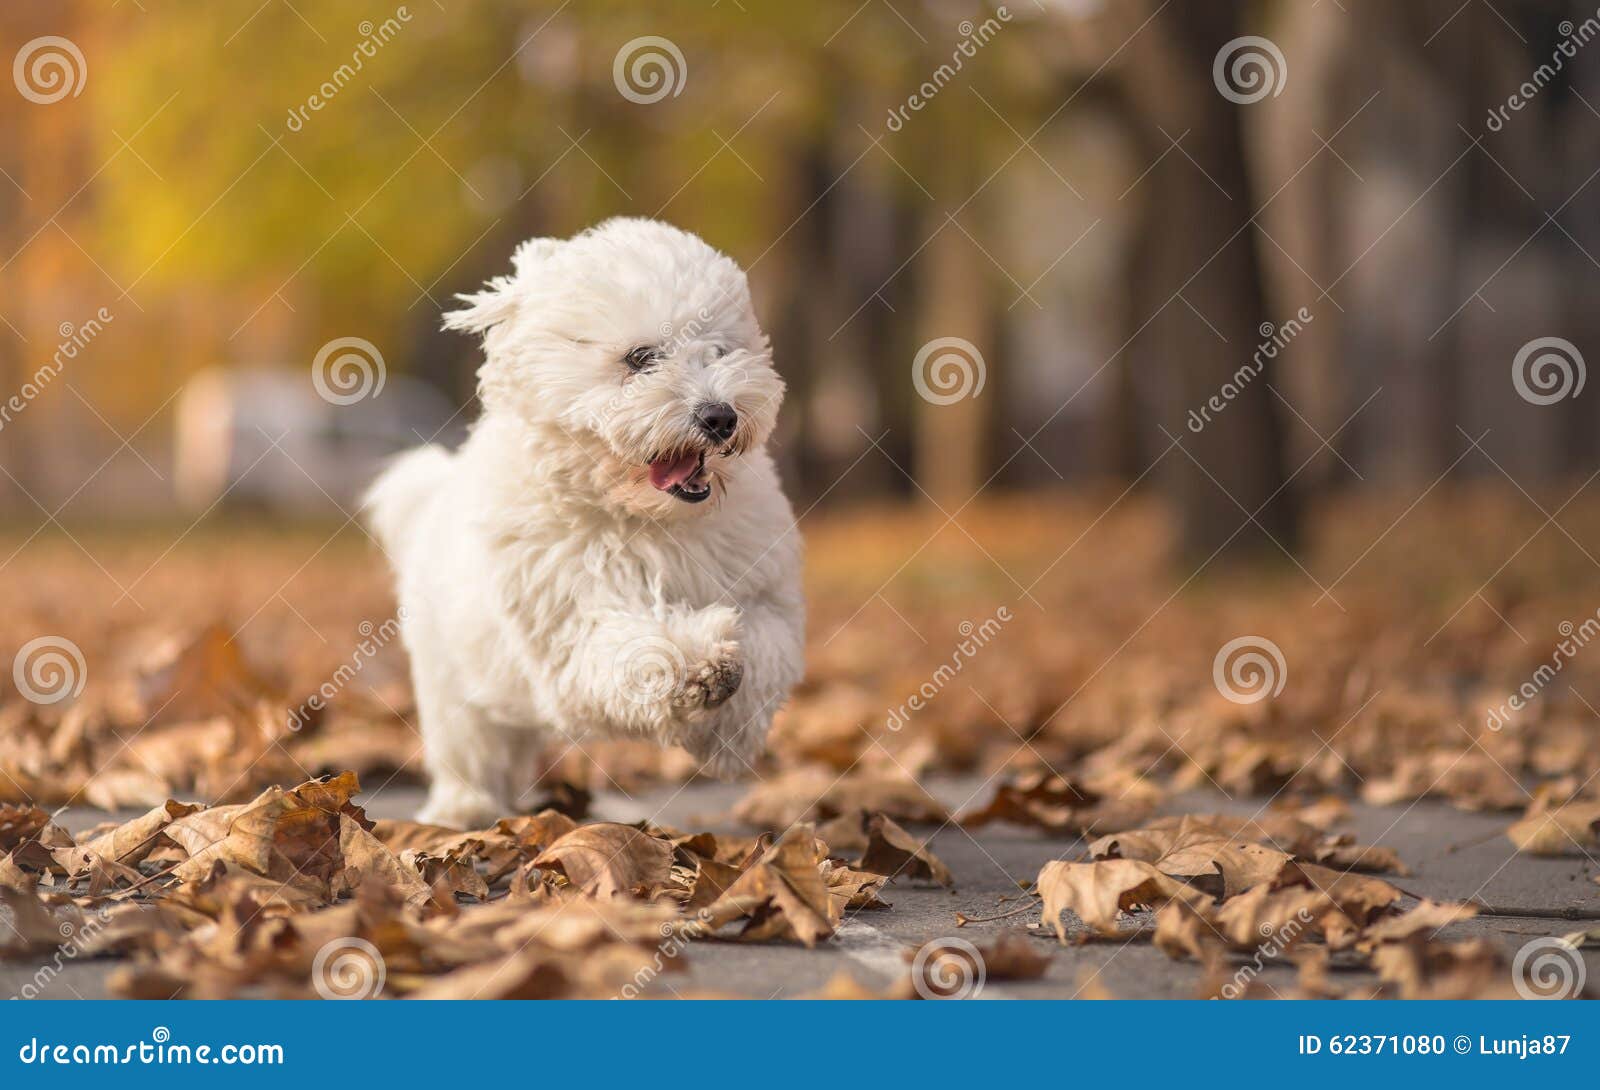 little white dog run in park